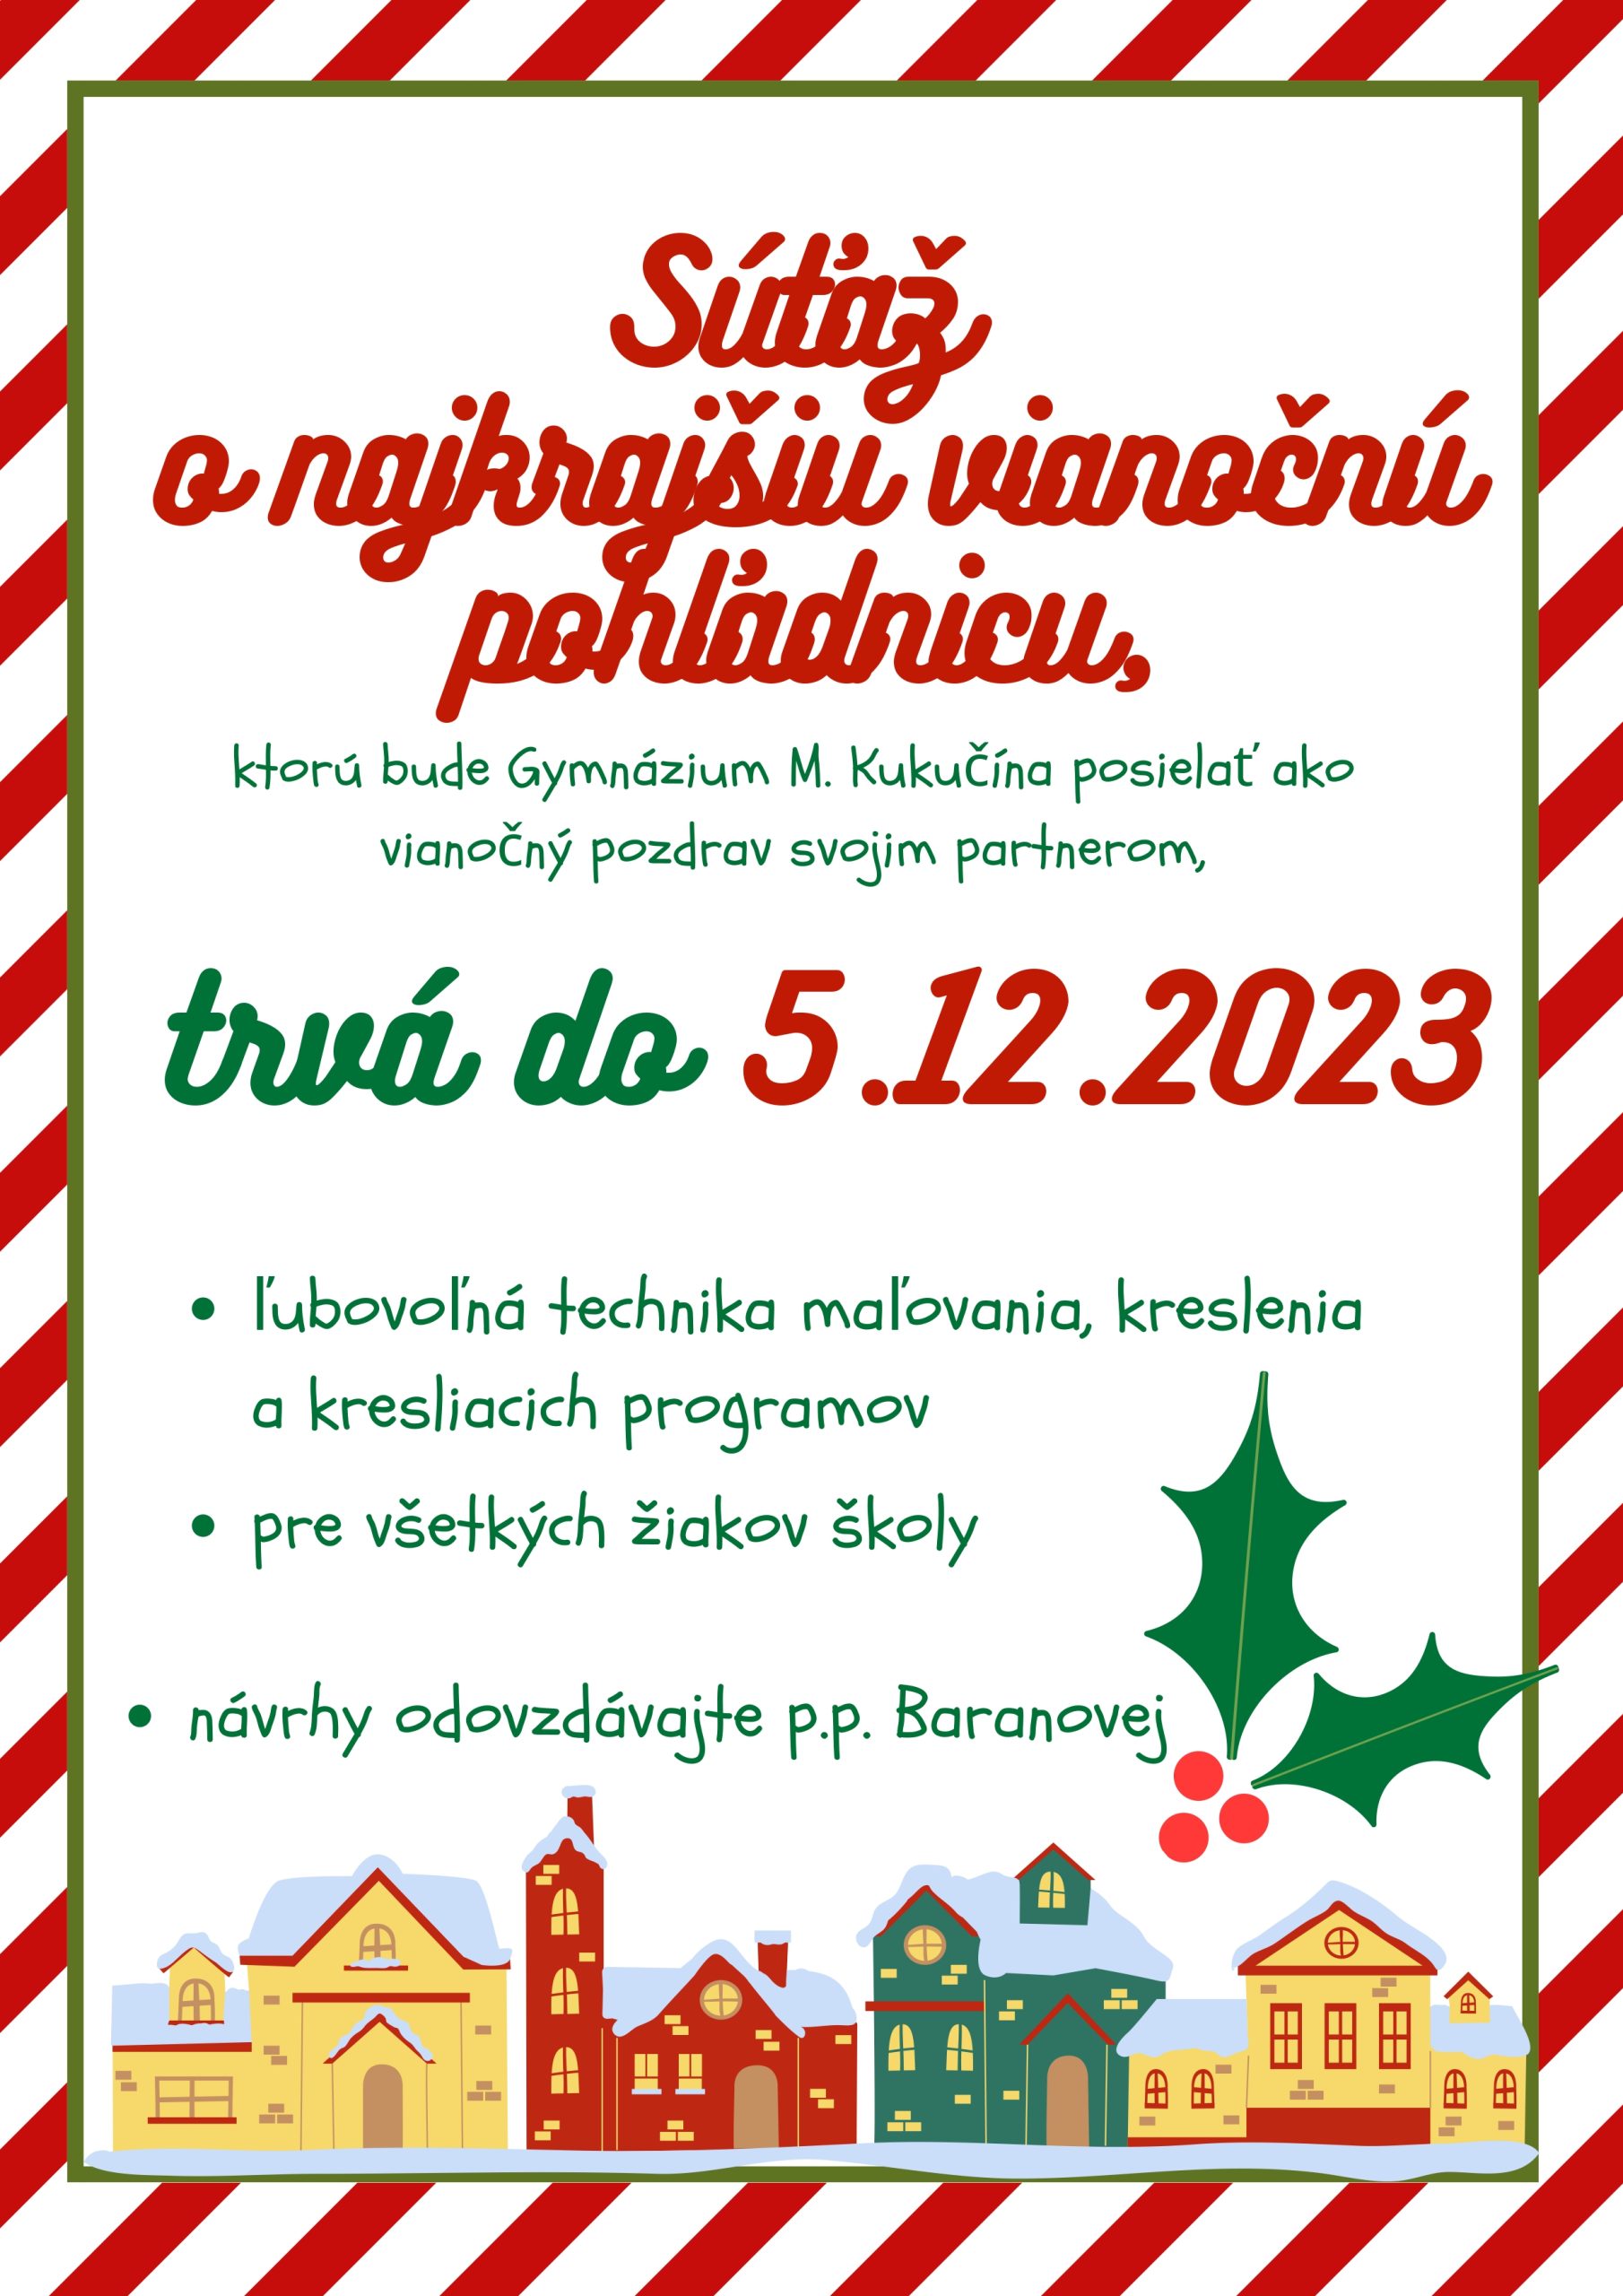 Featured image for “Súťaž o najkrajšiu vianočnú pohľadnicu 2023”